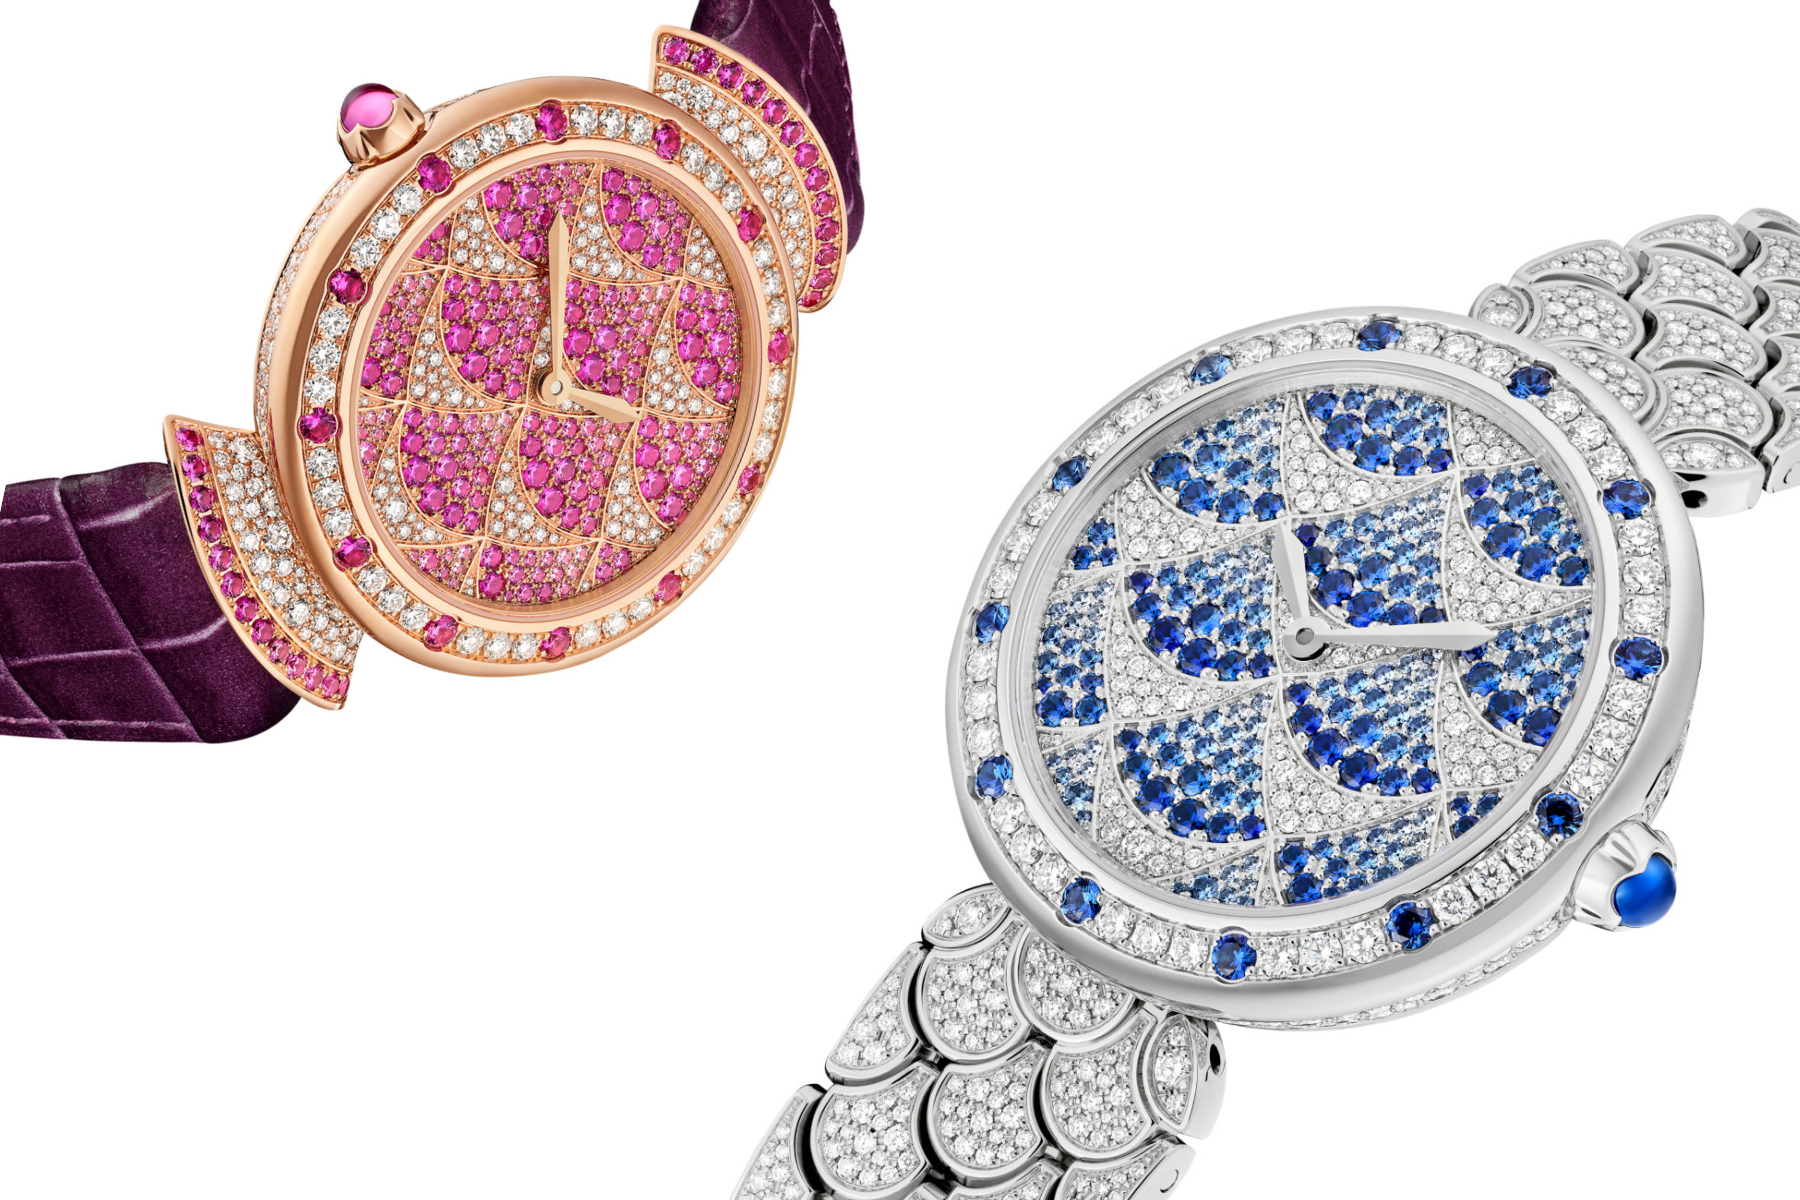 Divas' Dream Mosaica Pink Sapphire watch and a Divas' Dream Mosaica Blue Sapphire watch